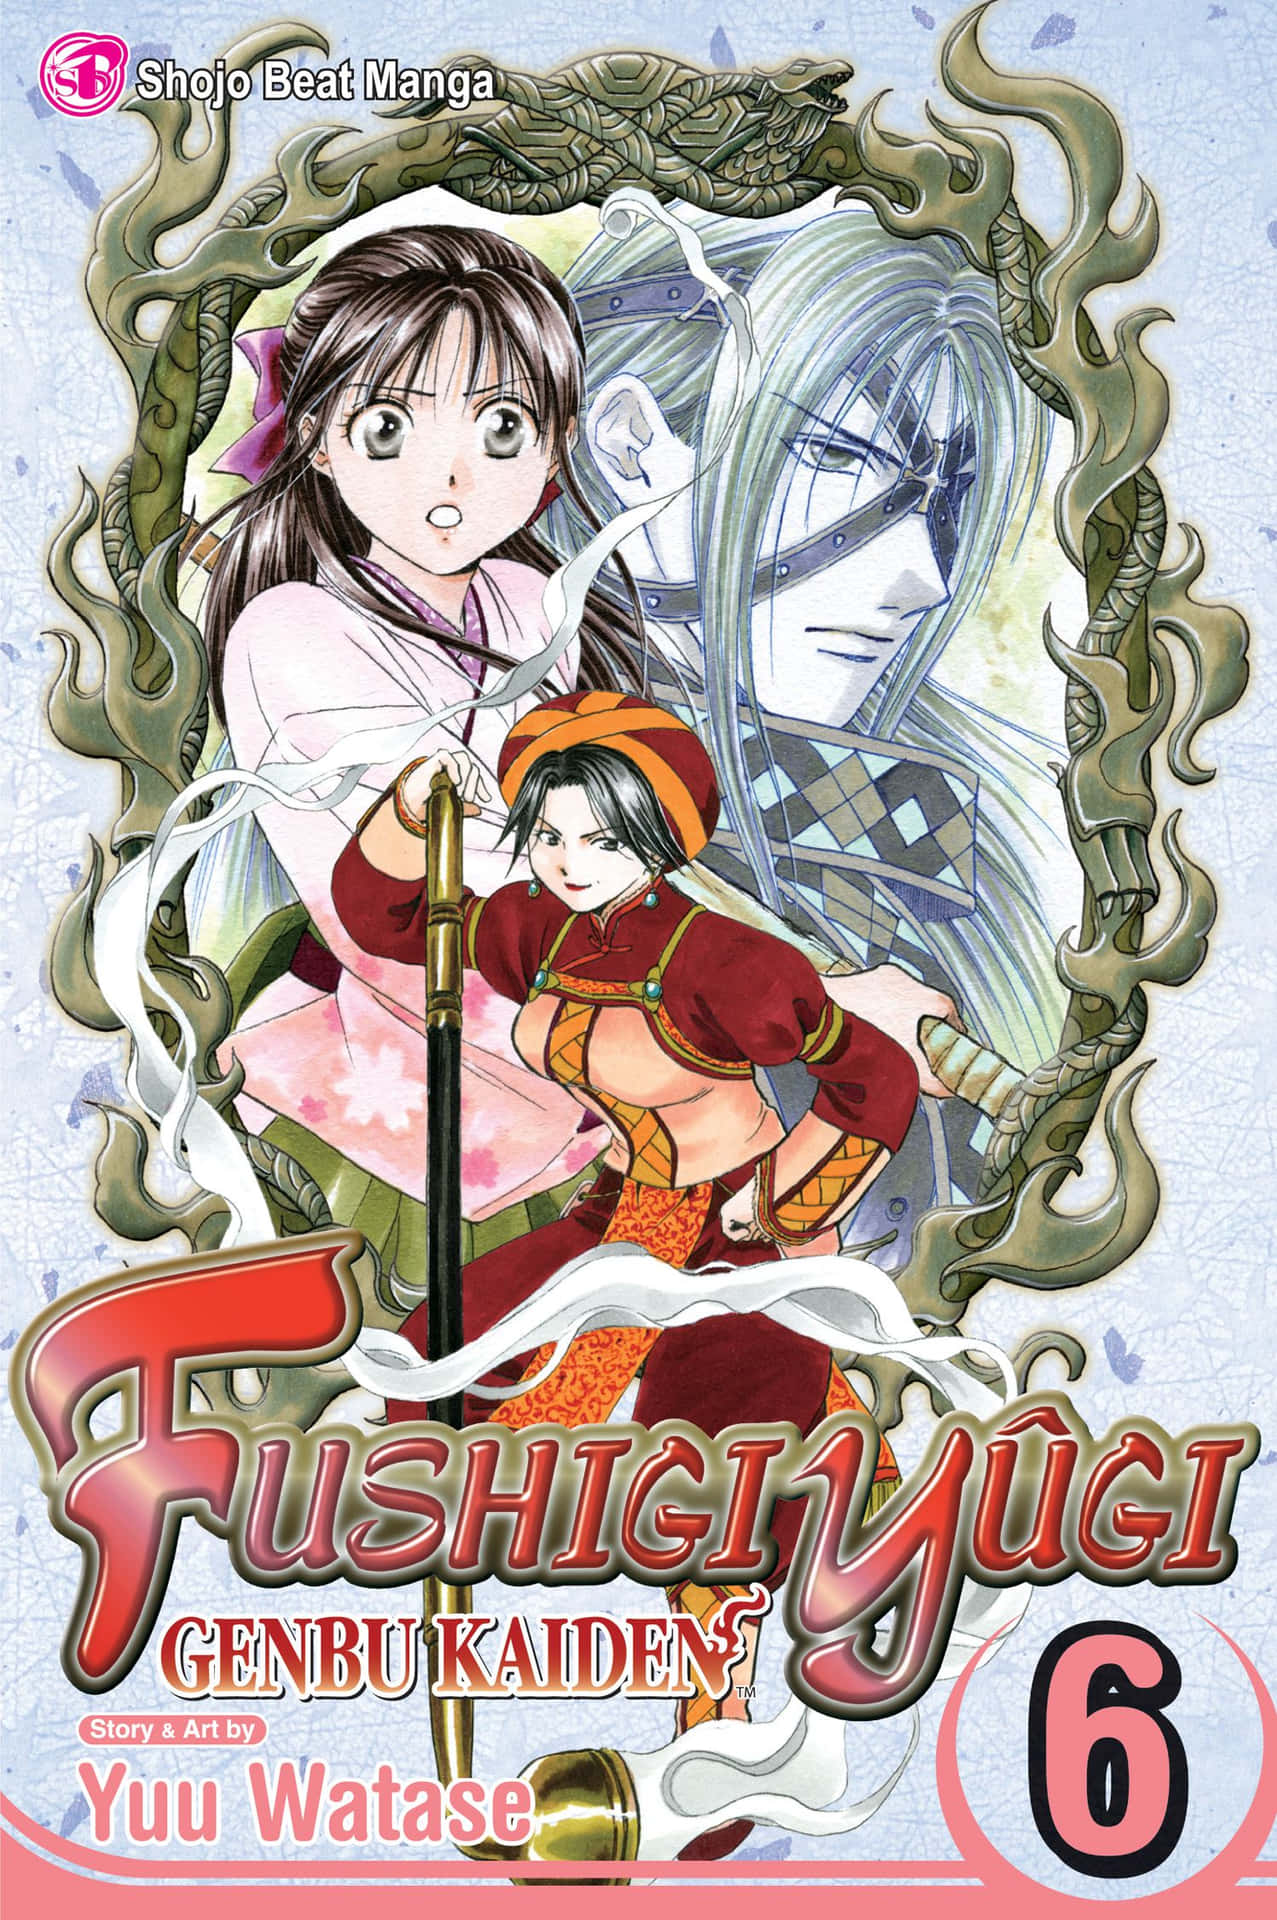 📷  "One of the Greatest Love Stories in Anime: Fushigi Yuugi"